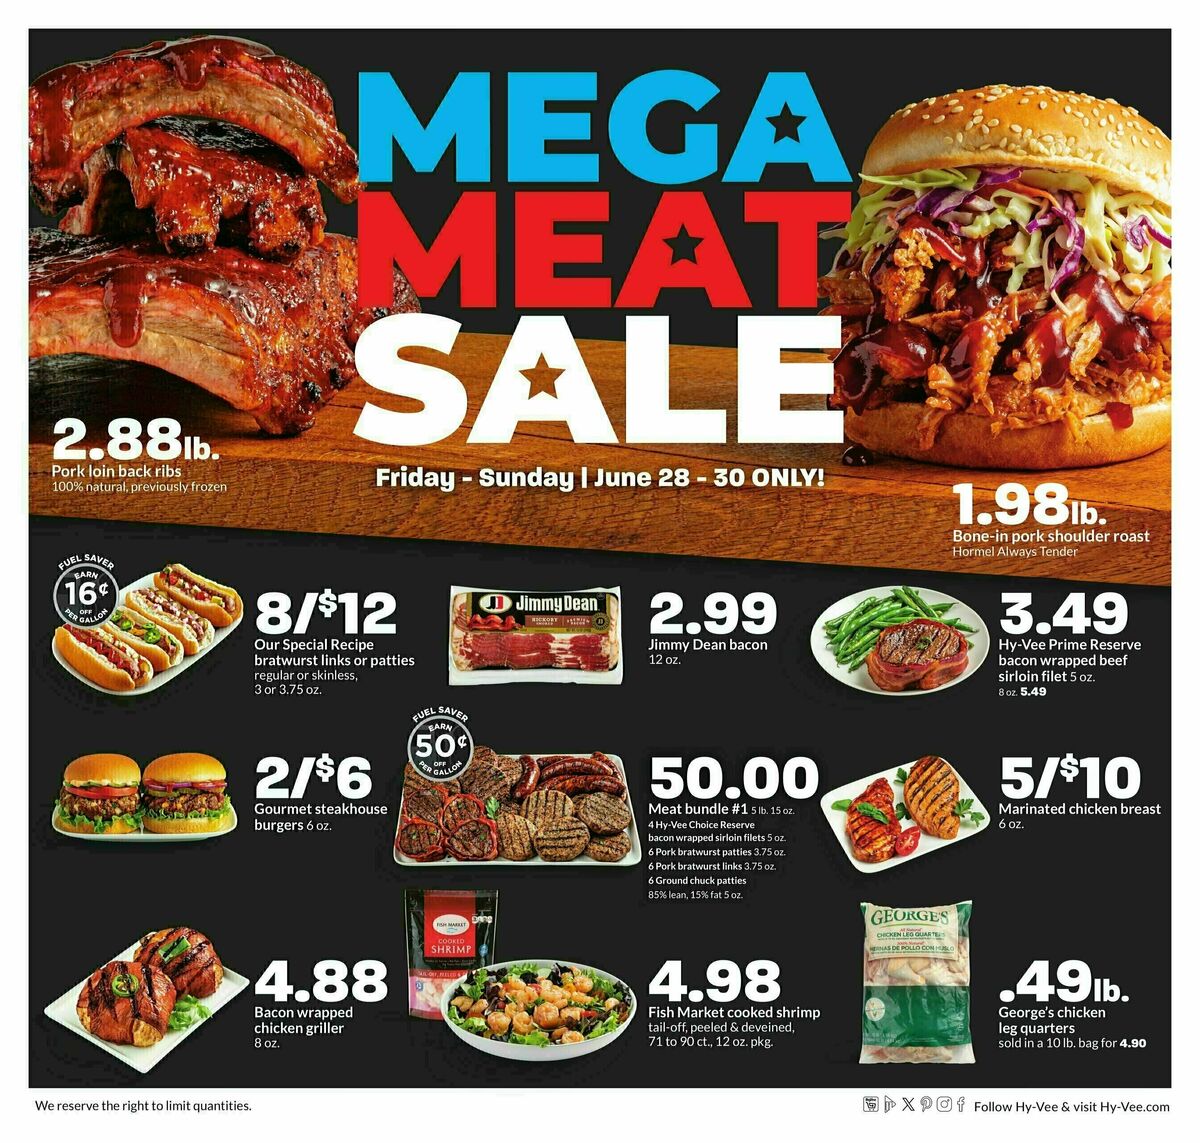 Hy-Vee Mega Meat Sale Weekly Ad from June 28